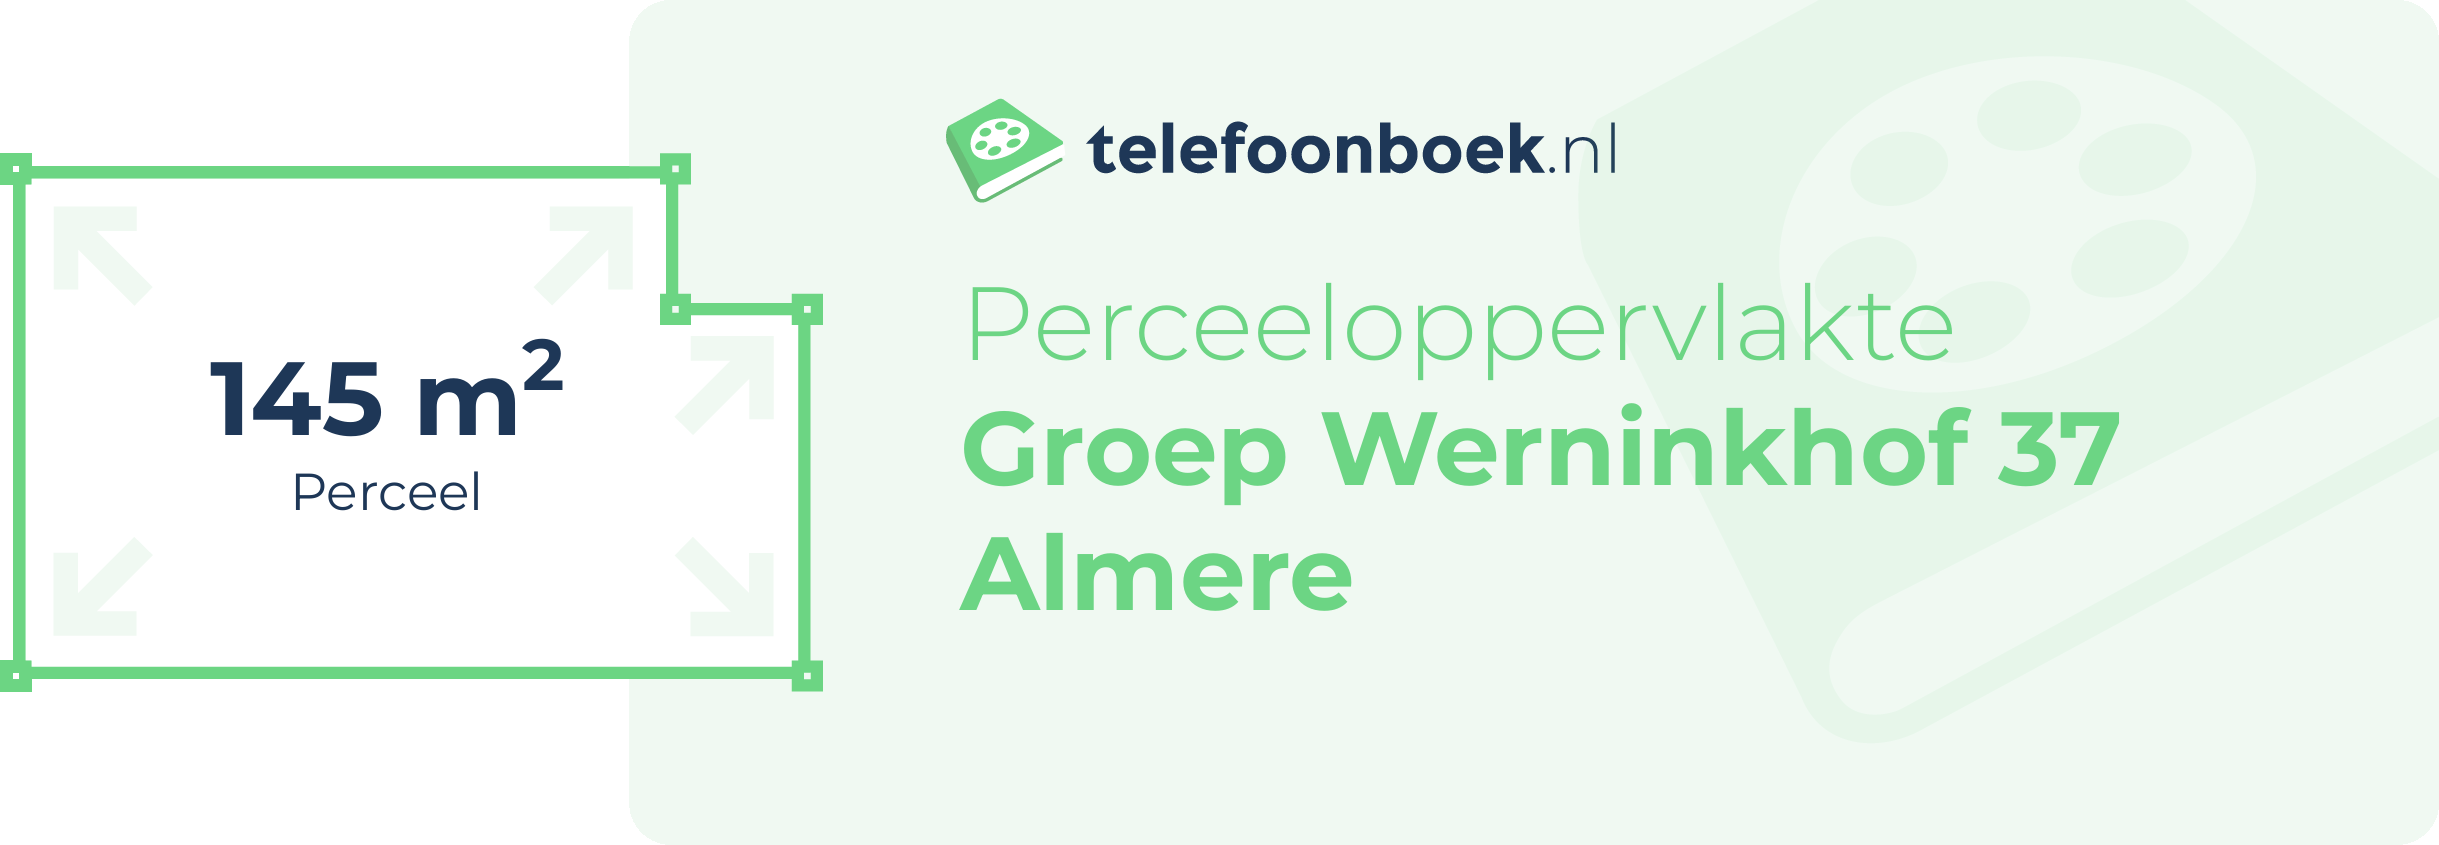 Perceeloppervlakte Groep Werninkhof 37 Almere